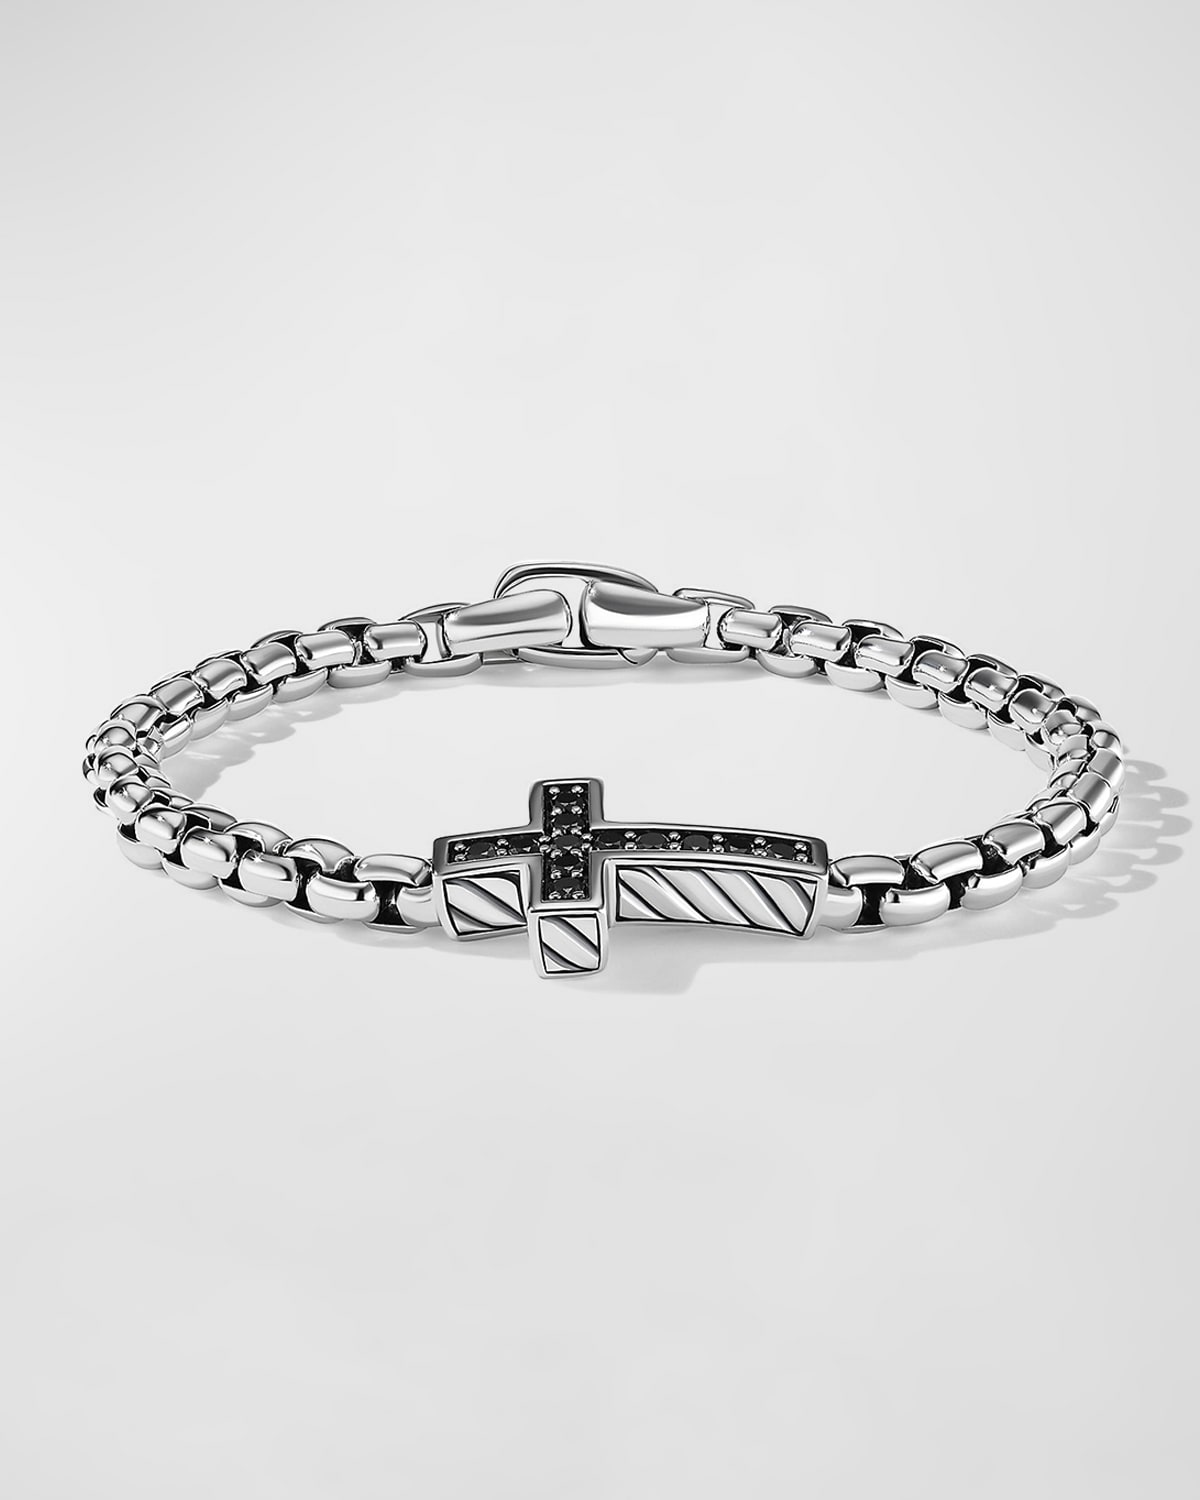 David Yurman Men's Pave Cross Bracelet In Silver With Black Diamonds, 5mm, 5.5"l